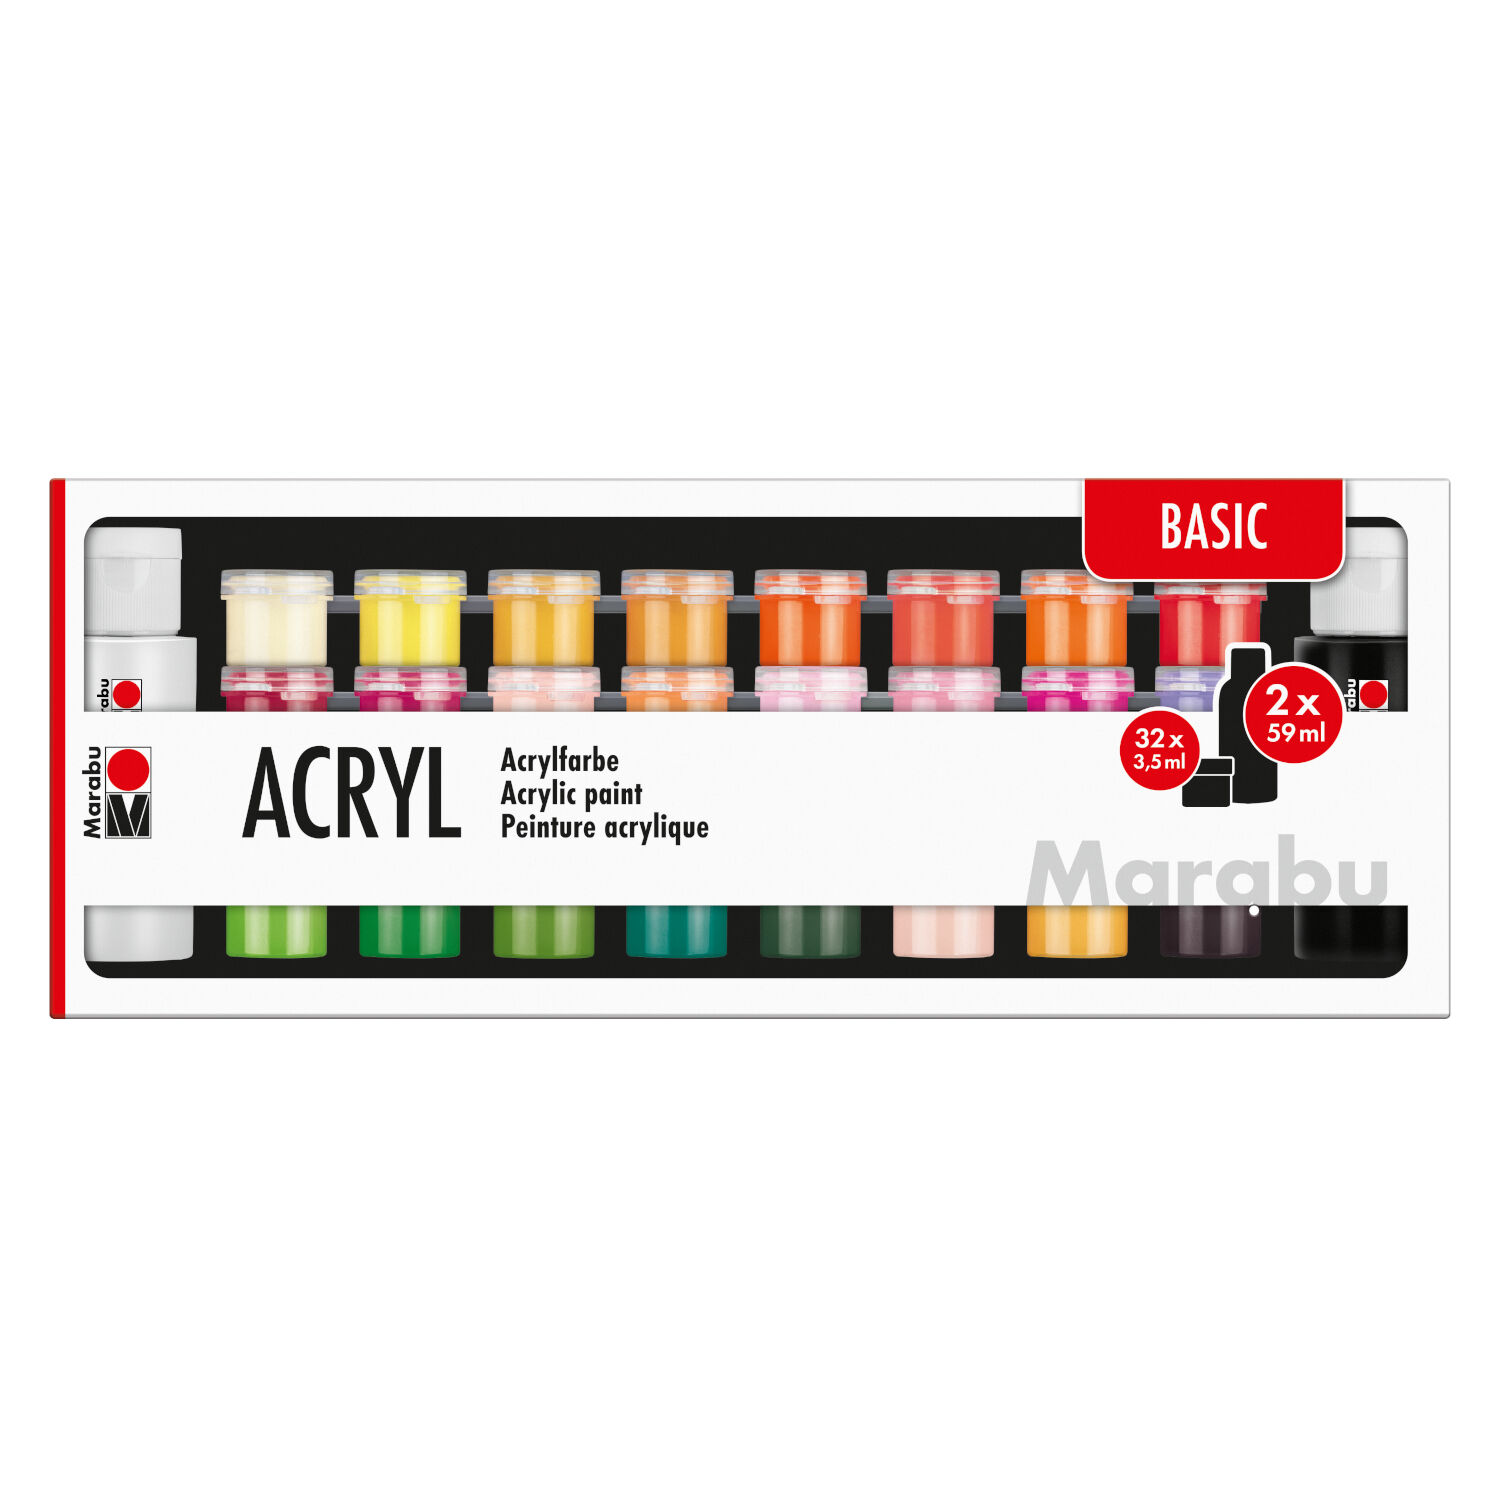 NEU Marabu Acrylfarben-Set BASIC, 32 x 3,5 ml & 2 x 59 ml